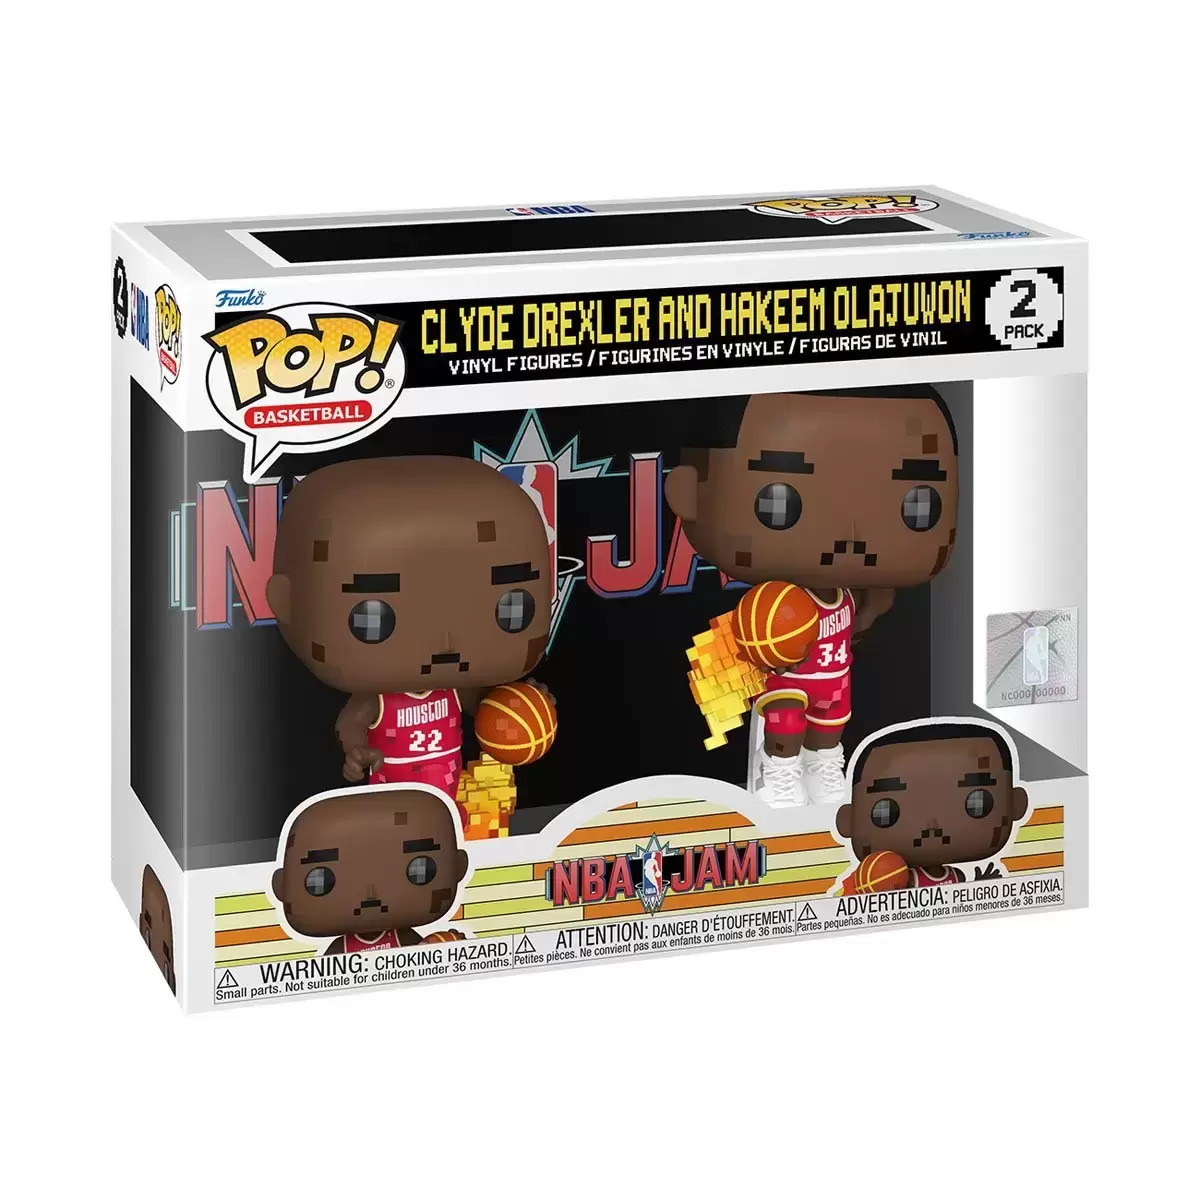 POP! Sports/Basketball - NBA Jam - Clyde Drexler And Hakeem Olajuwon 2 Pack